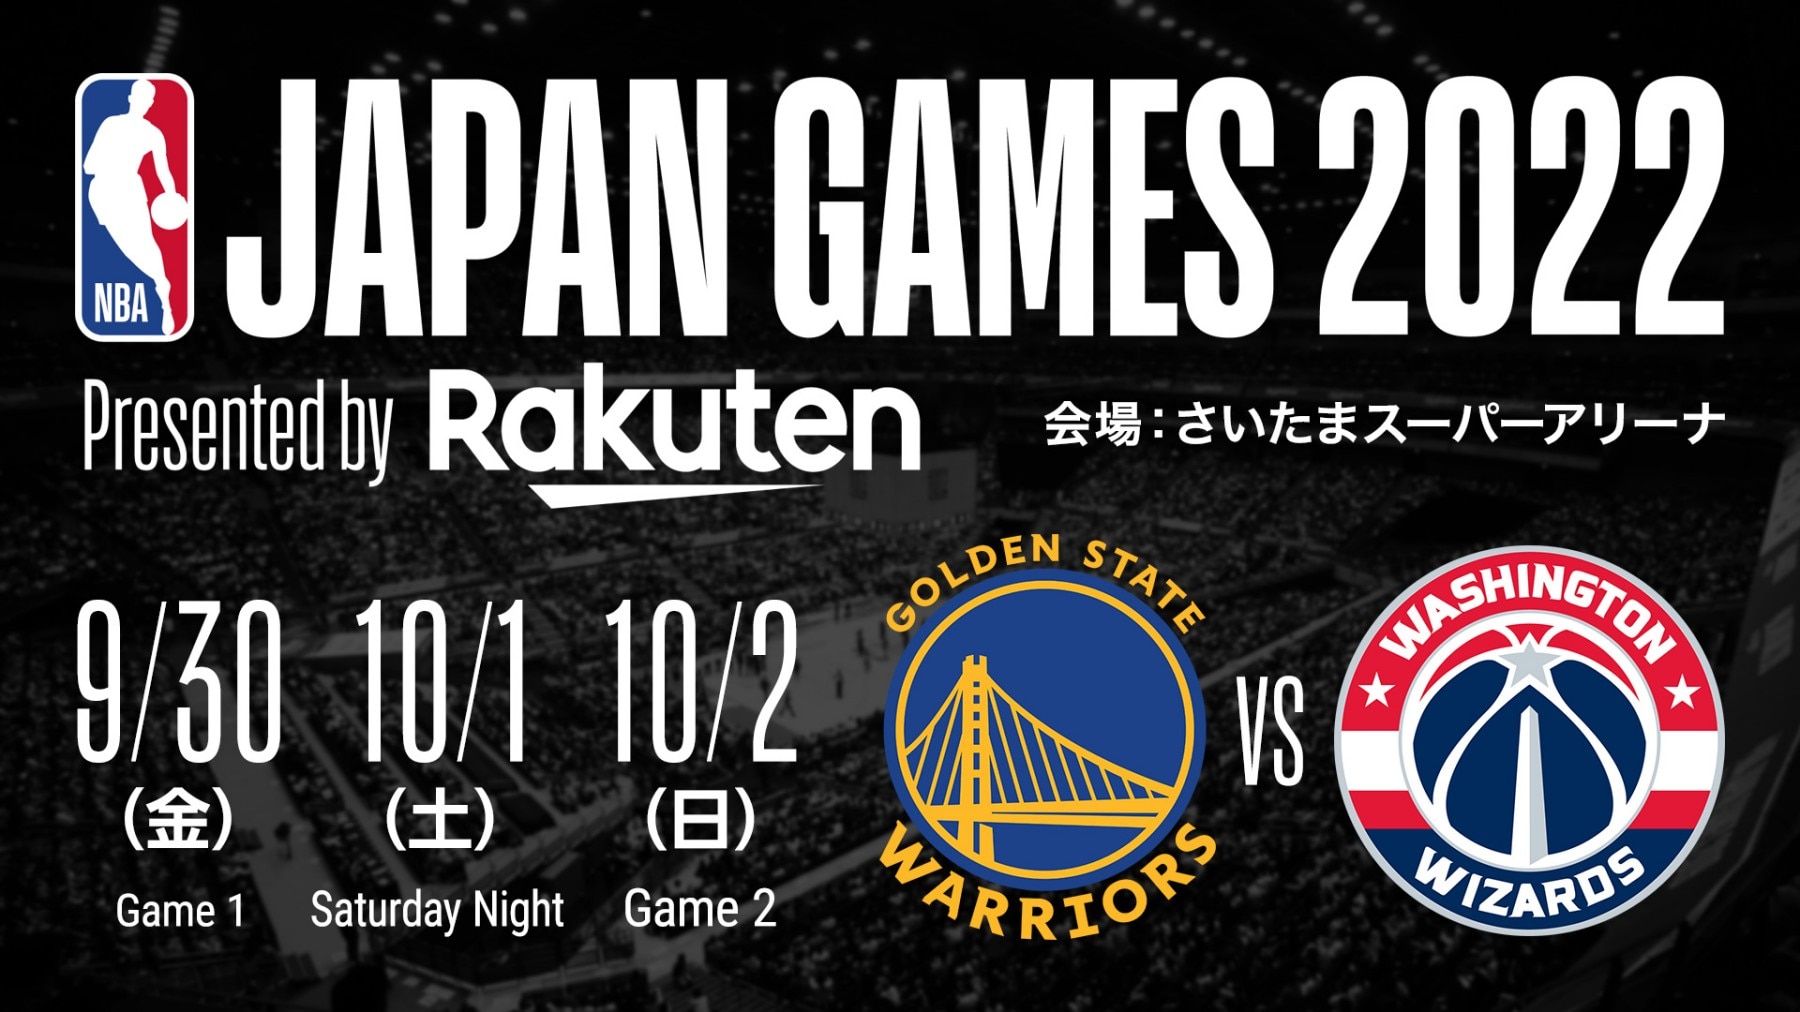 NBA Japan Games 2022 Presented by Rakuten」の特別アイテム付き観戦 